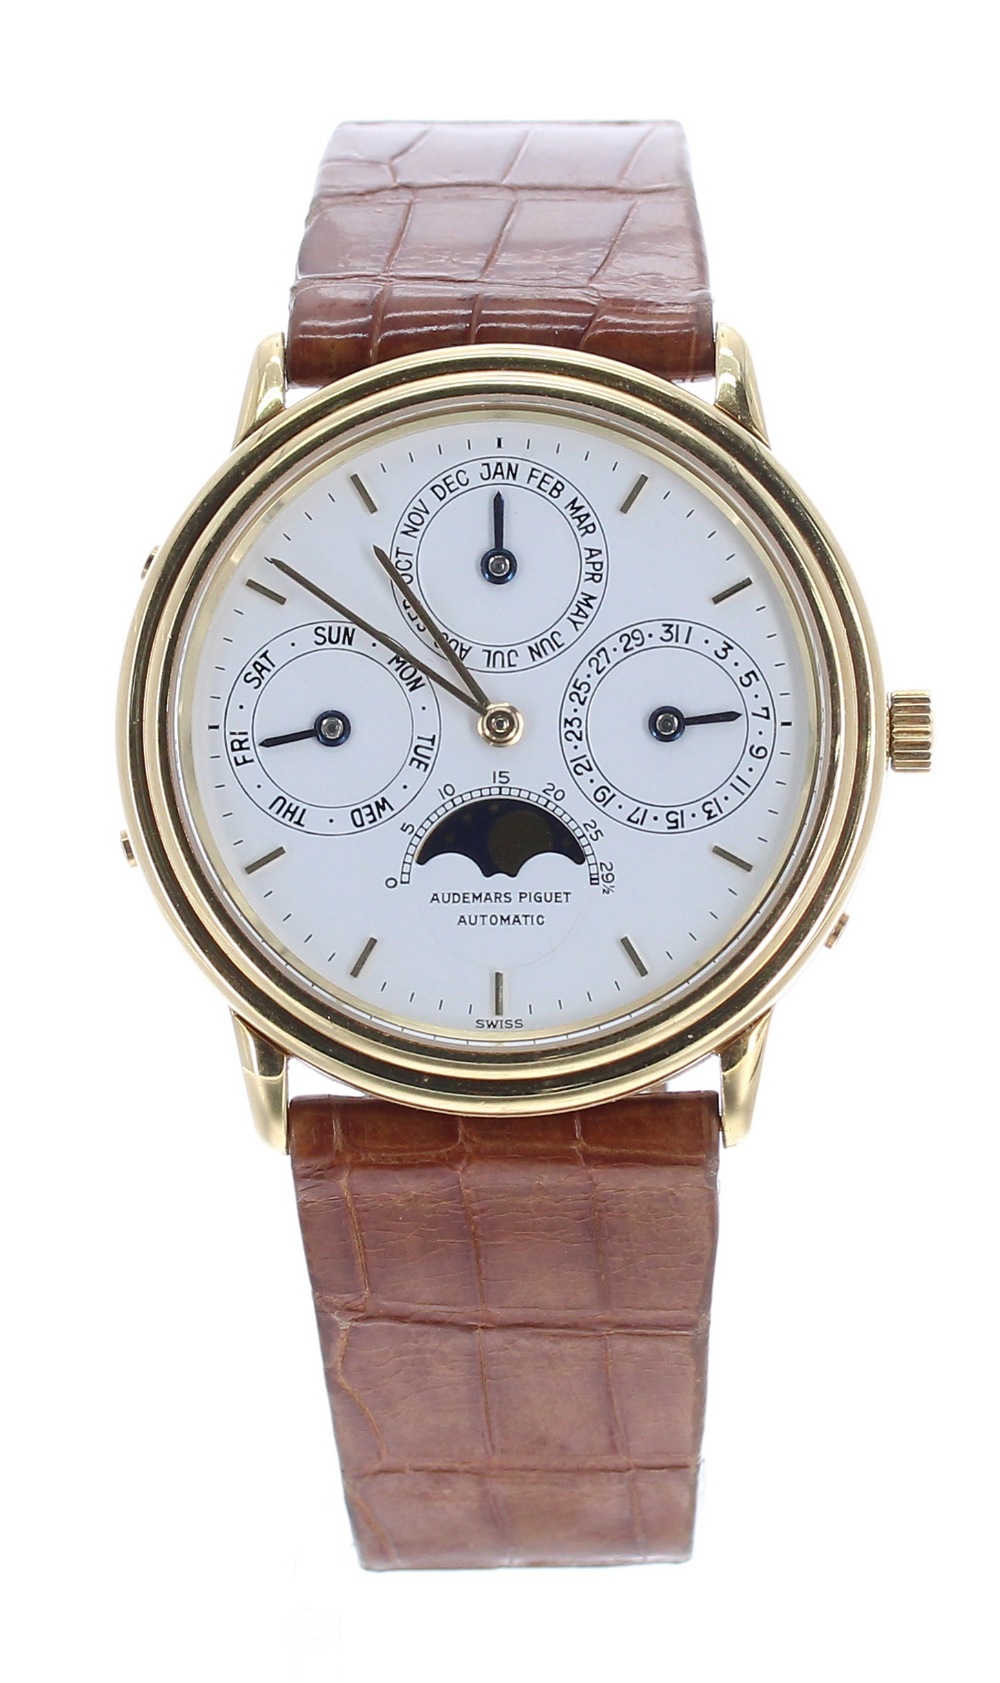 Fine Audemars Piguet Quantieme Perpetual Calendar 18ct automatic gentleman's wristwatch, ref.